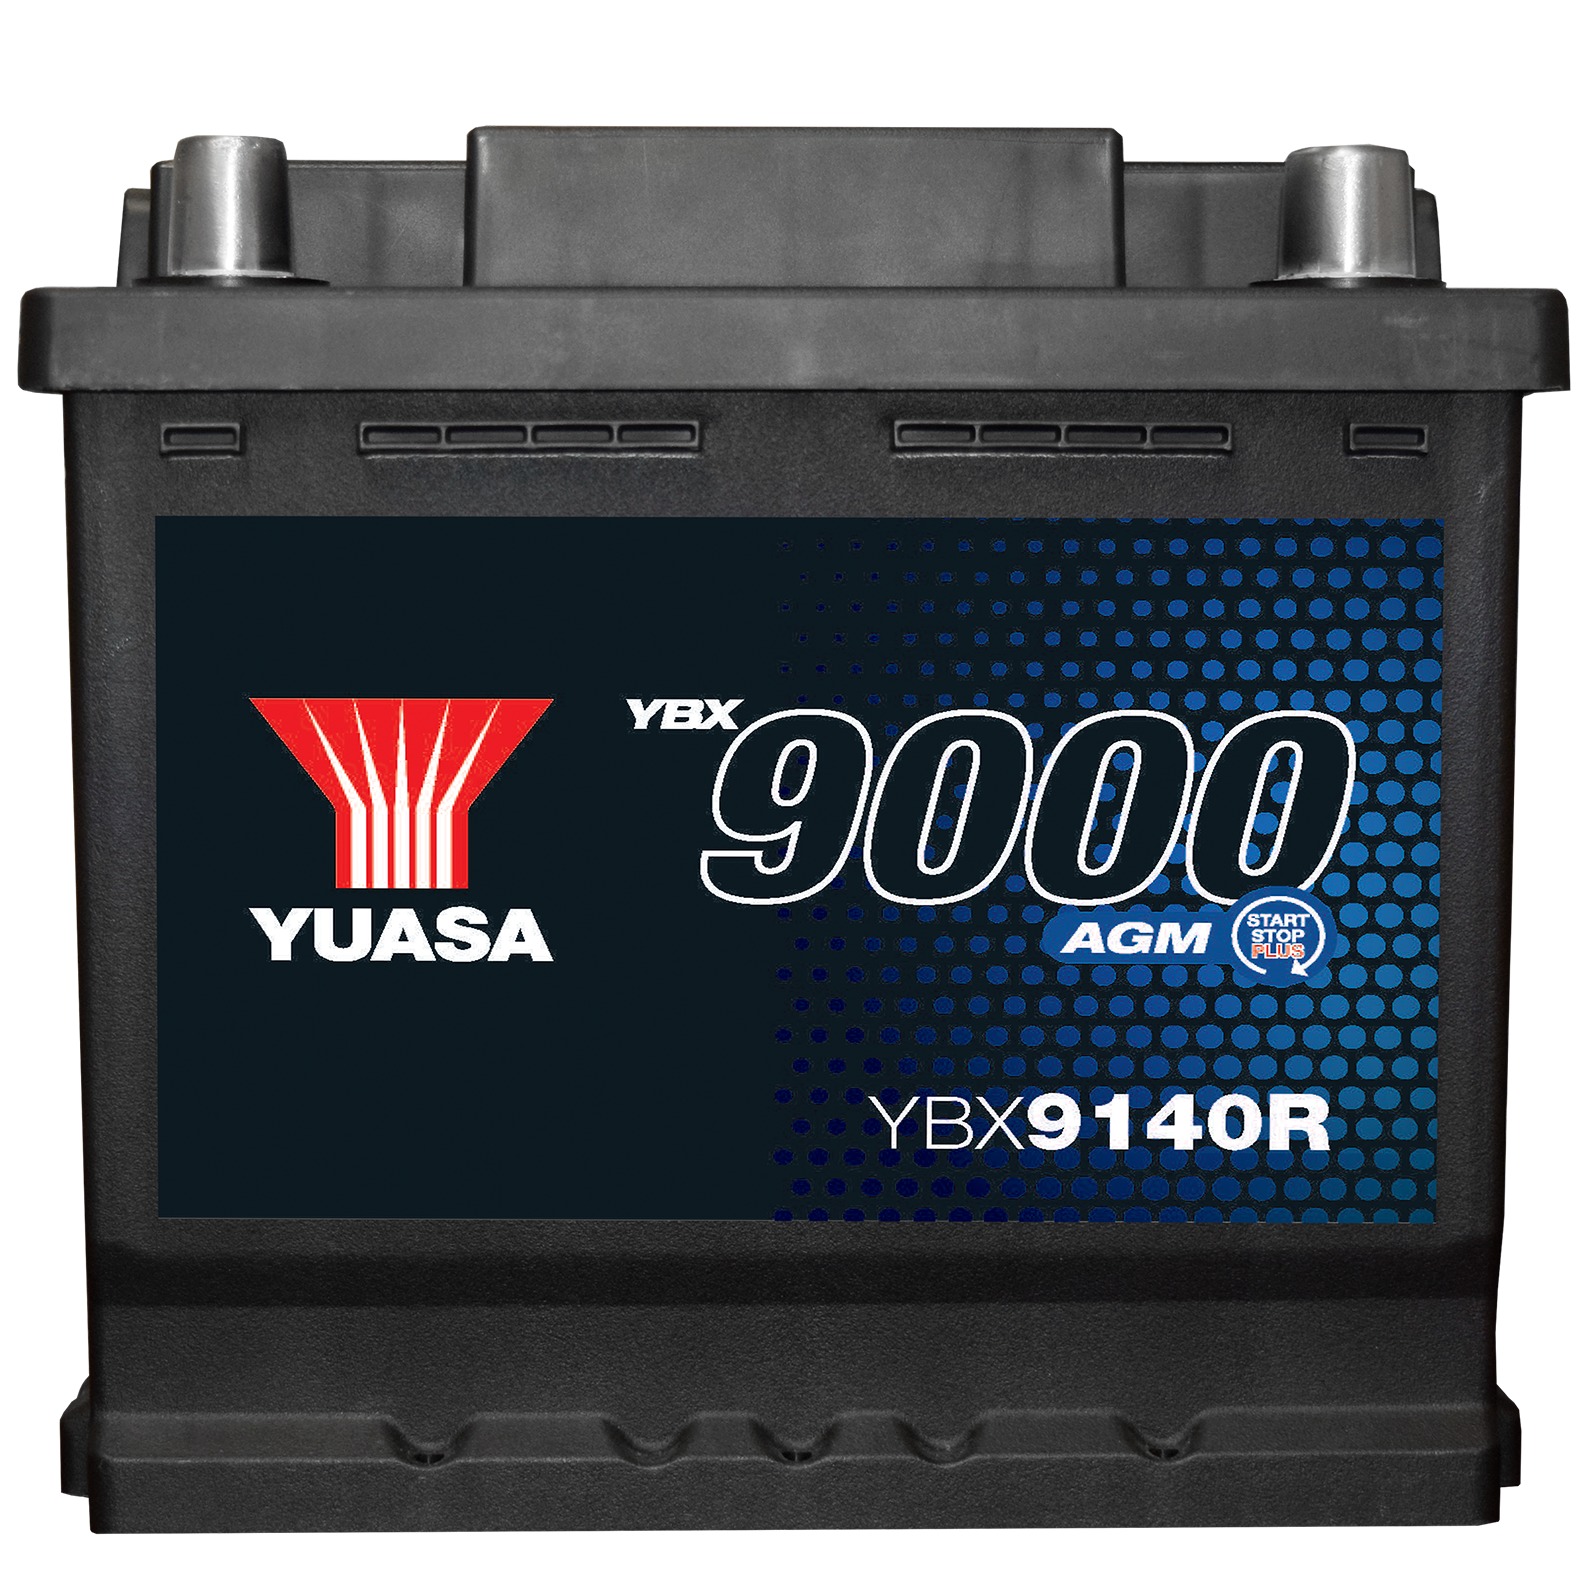 YBX9000 YBX9140R AGM Battery - 560 CCA, 50 Ah, Replaces # 26012-7501, 26012-1377 - Click Image to Close